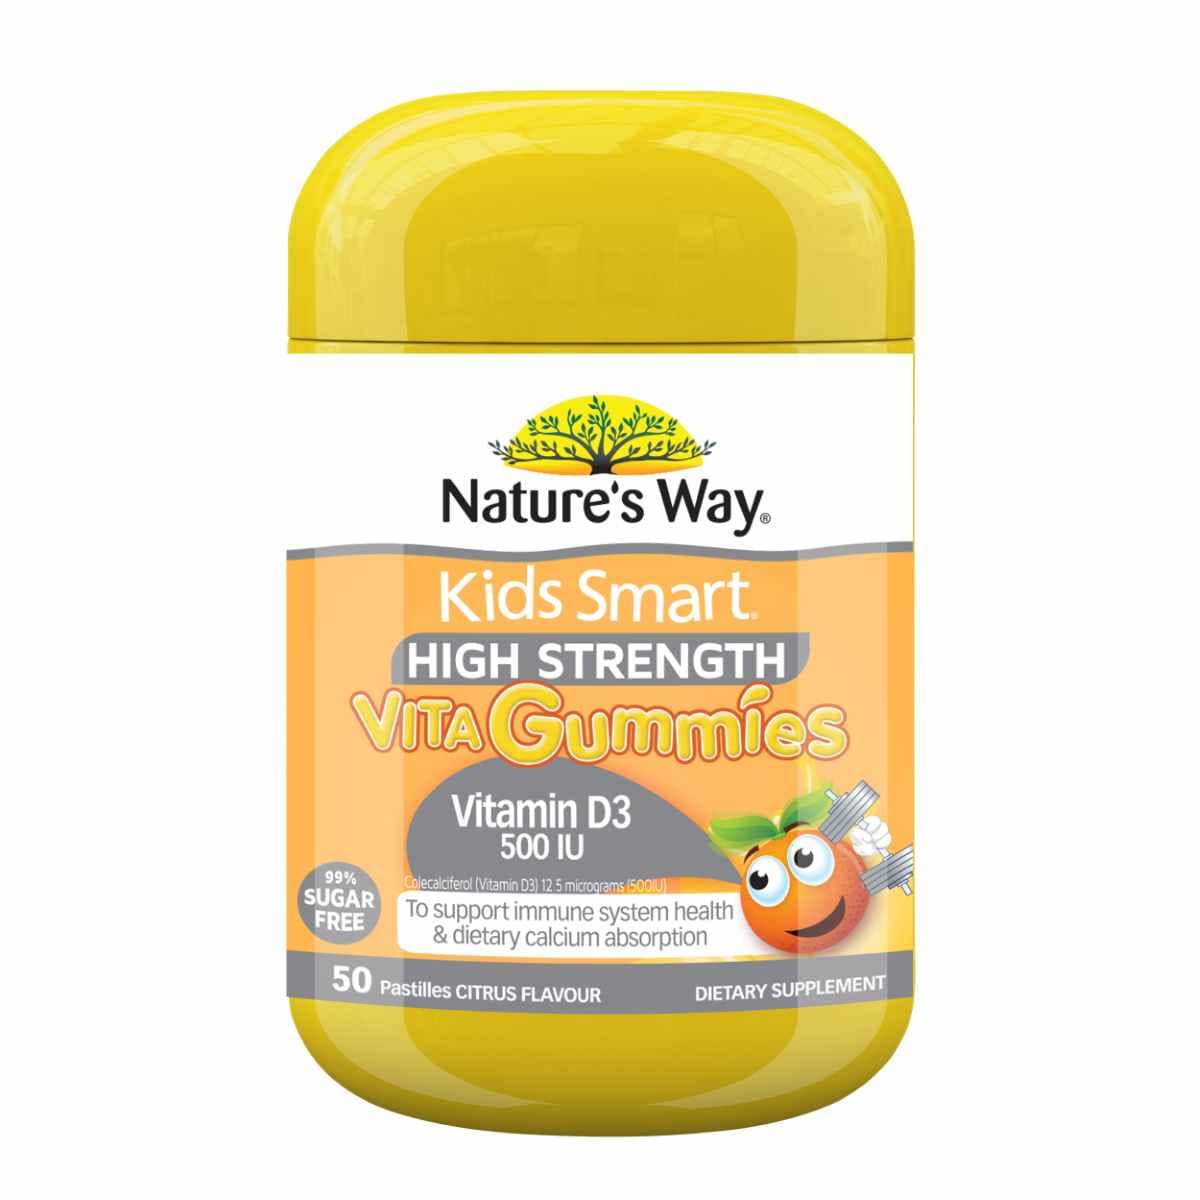 Natures Way Kids Smart High Strength Vita Gummies Vitamin D3 50 Pack